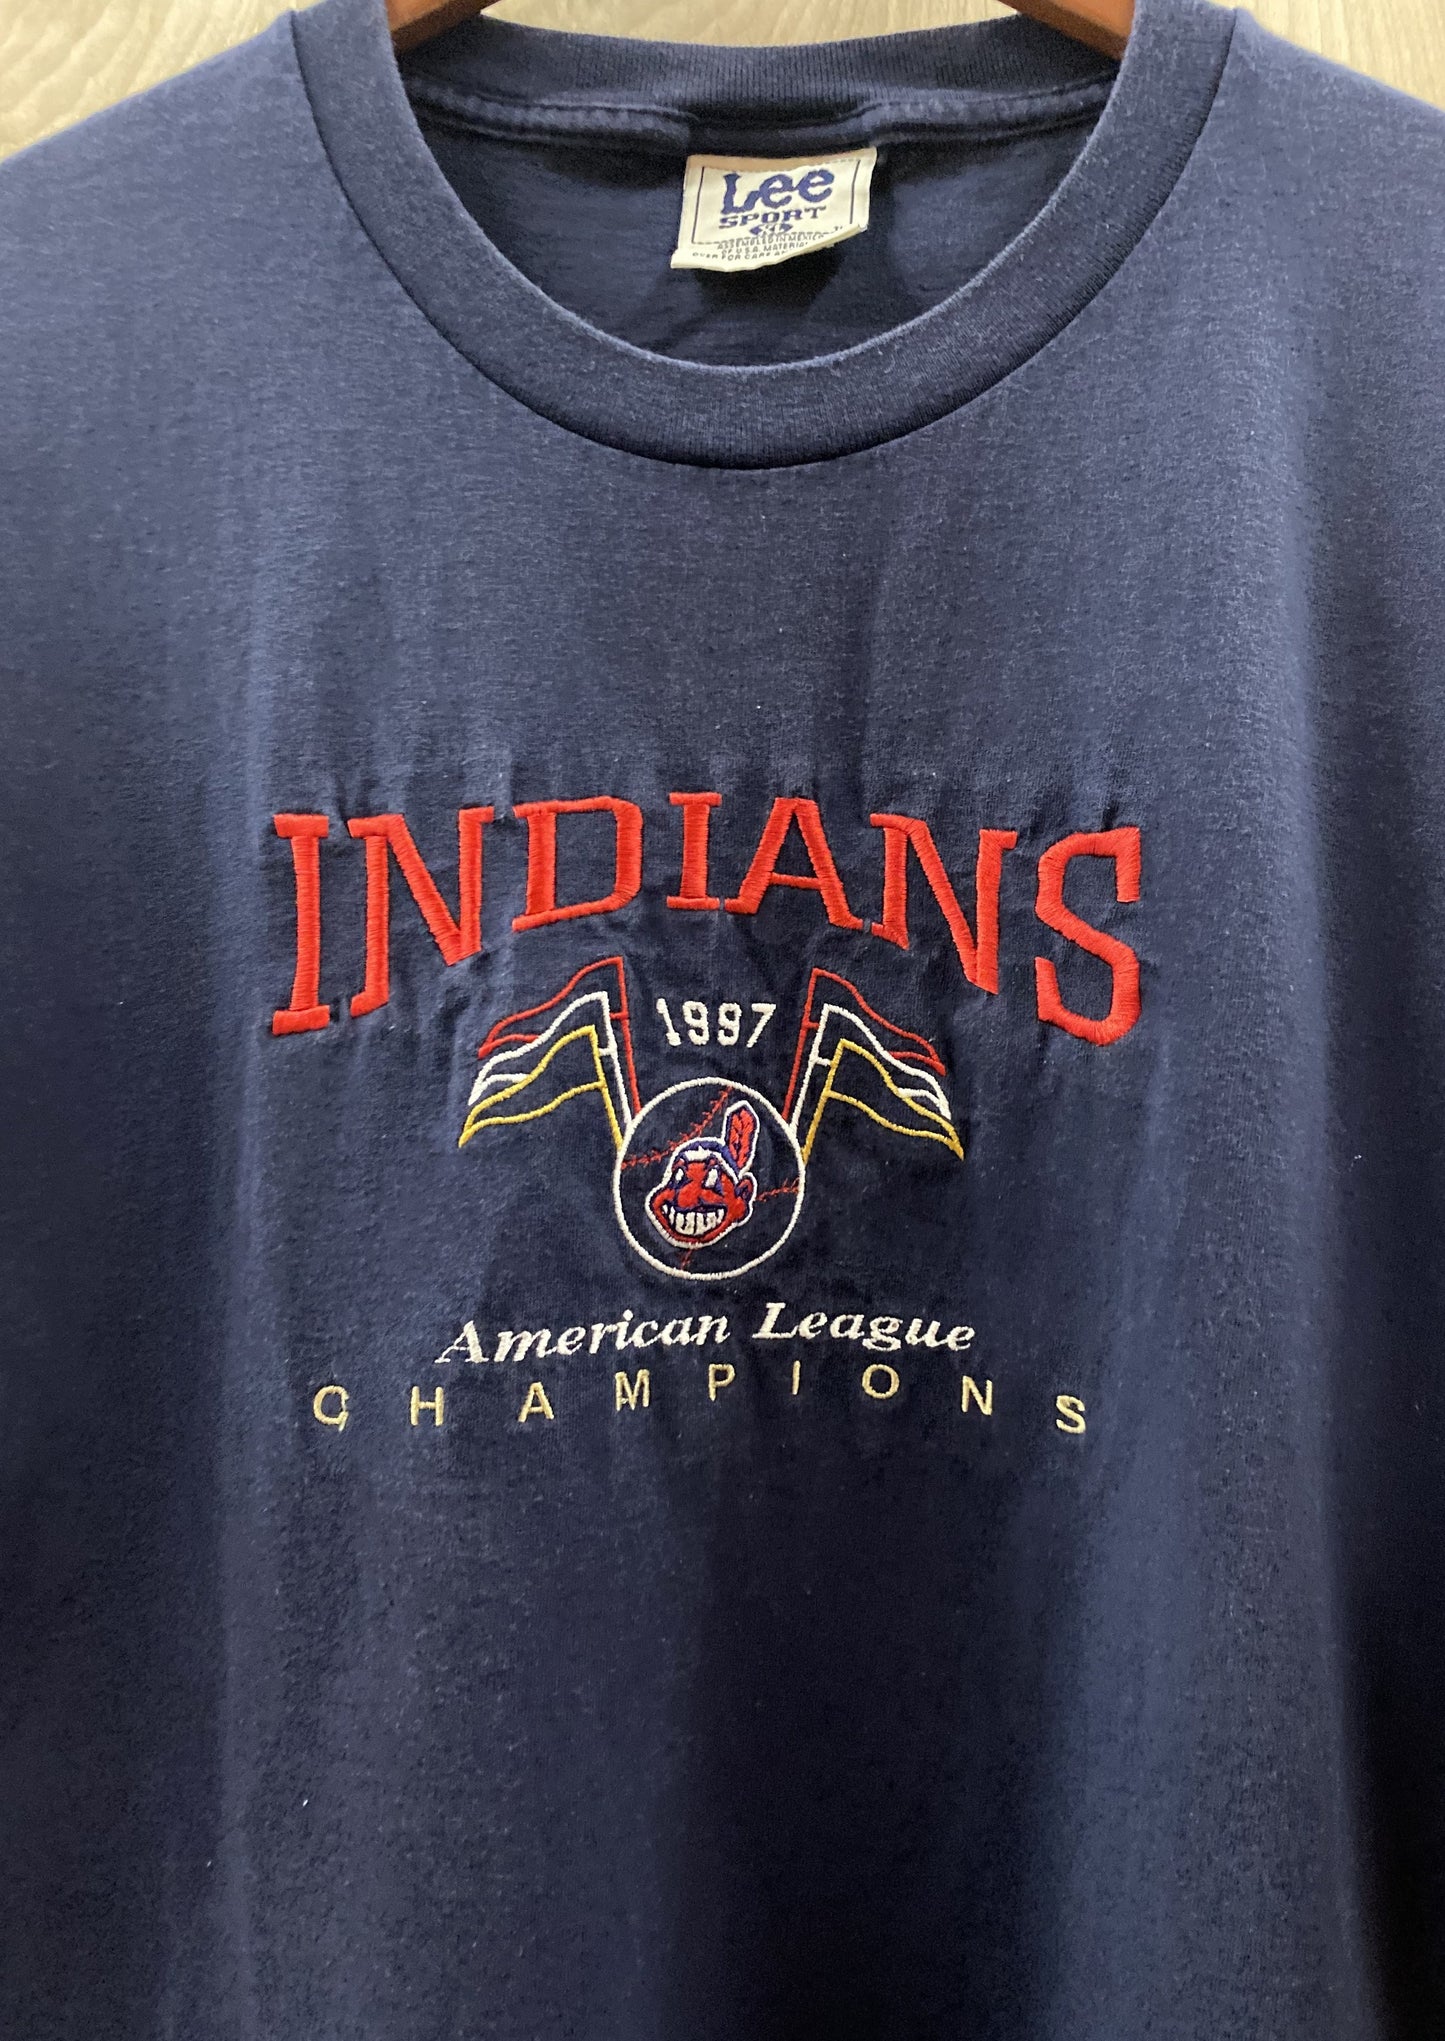 Lee Cleveland Indians Embrodery logo (4811527618640)